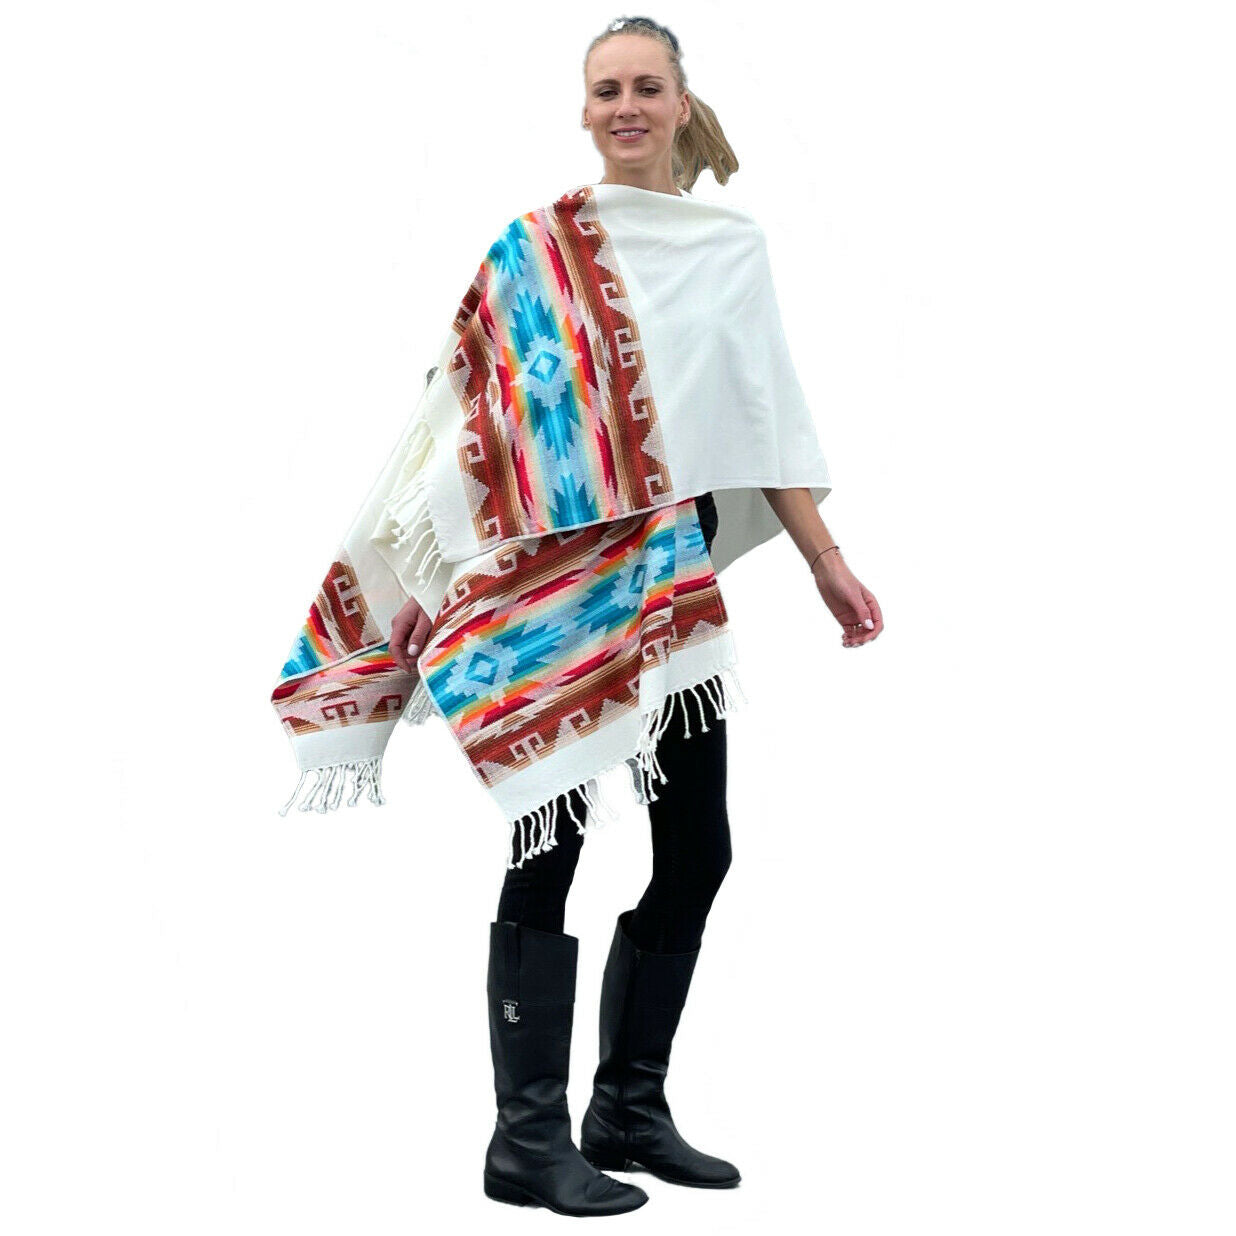 Lightweight Thin Alpaca Wool UNISEX Ruana Cape Poncho/Shawl - White with authentic pattern